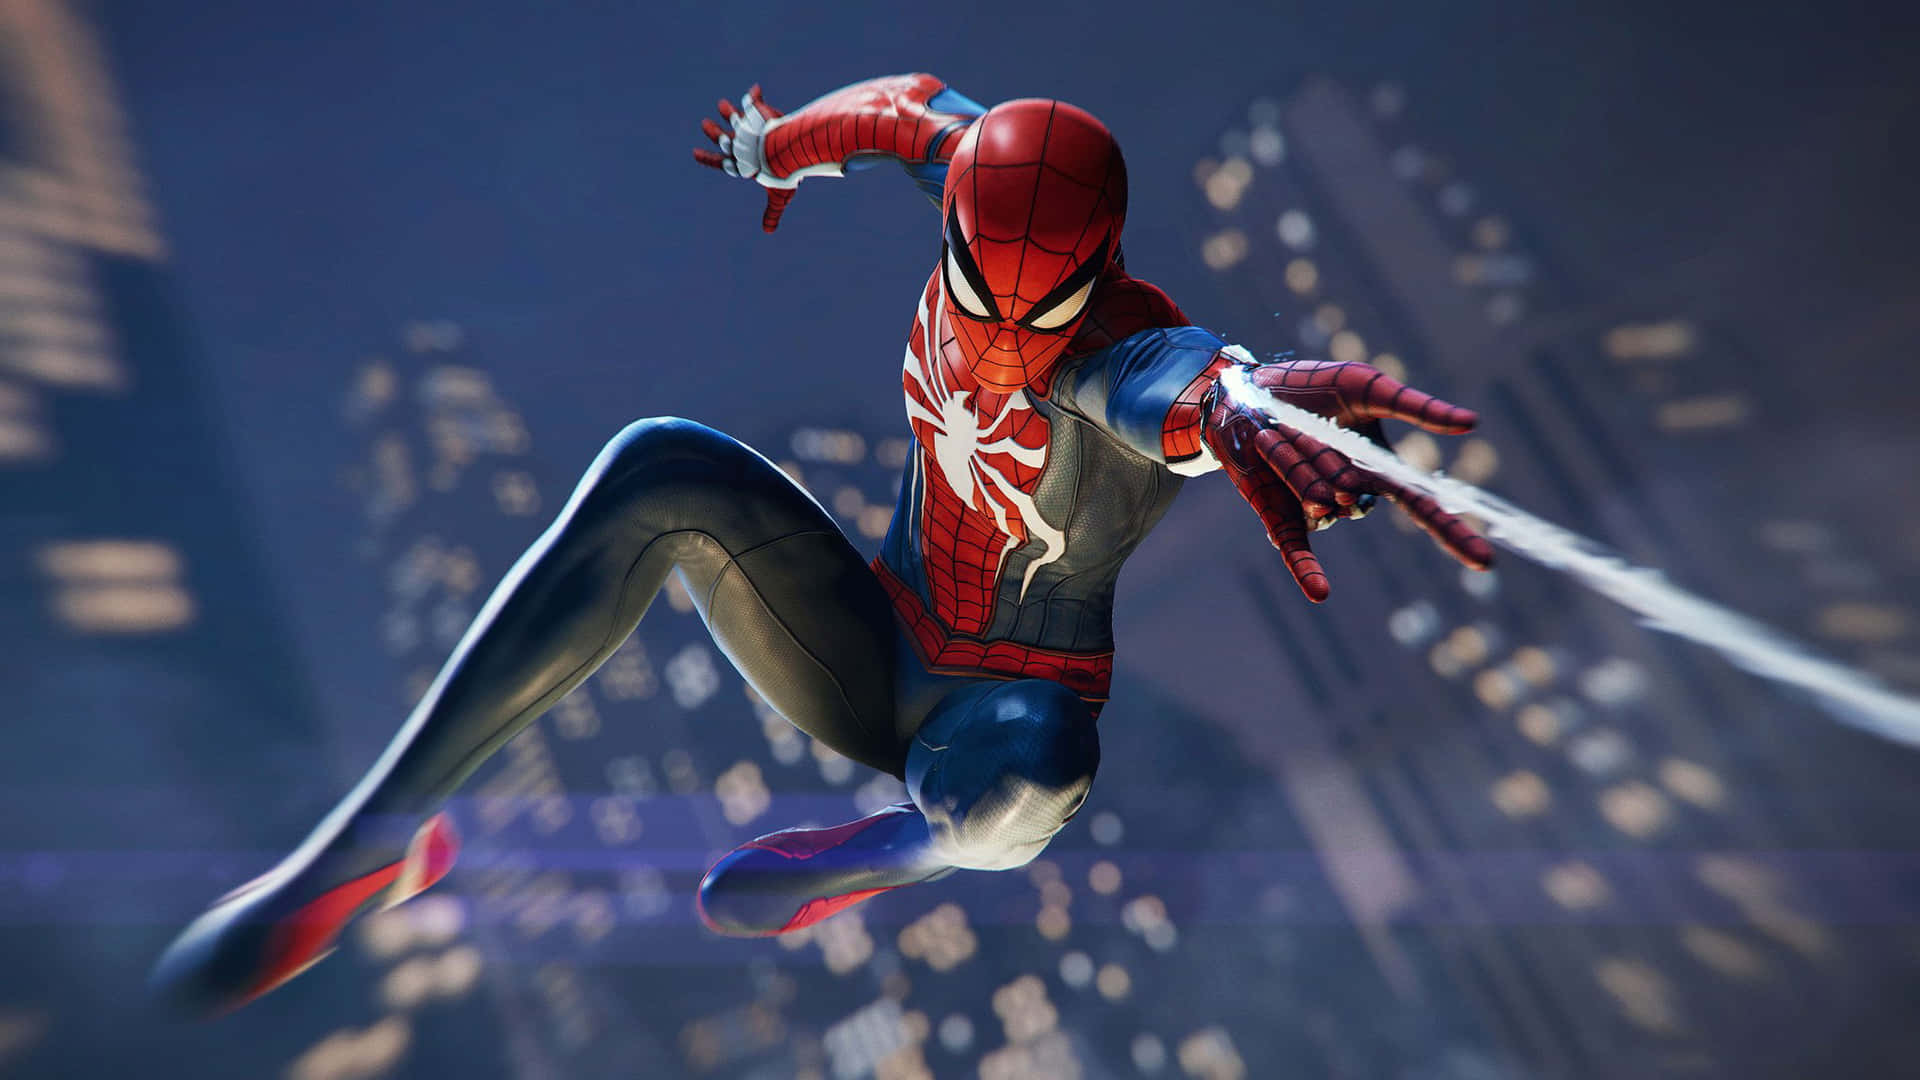 Incredible Spider-Man Web Slinging Action Wallpaper